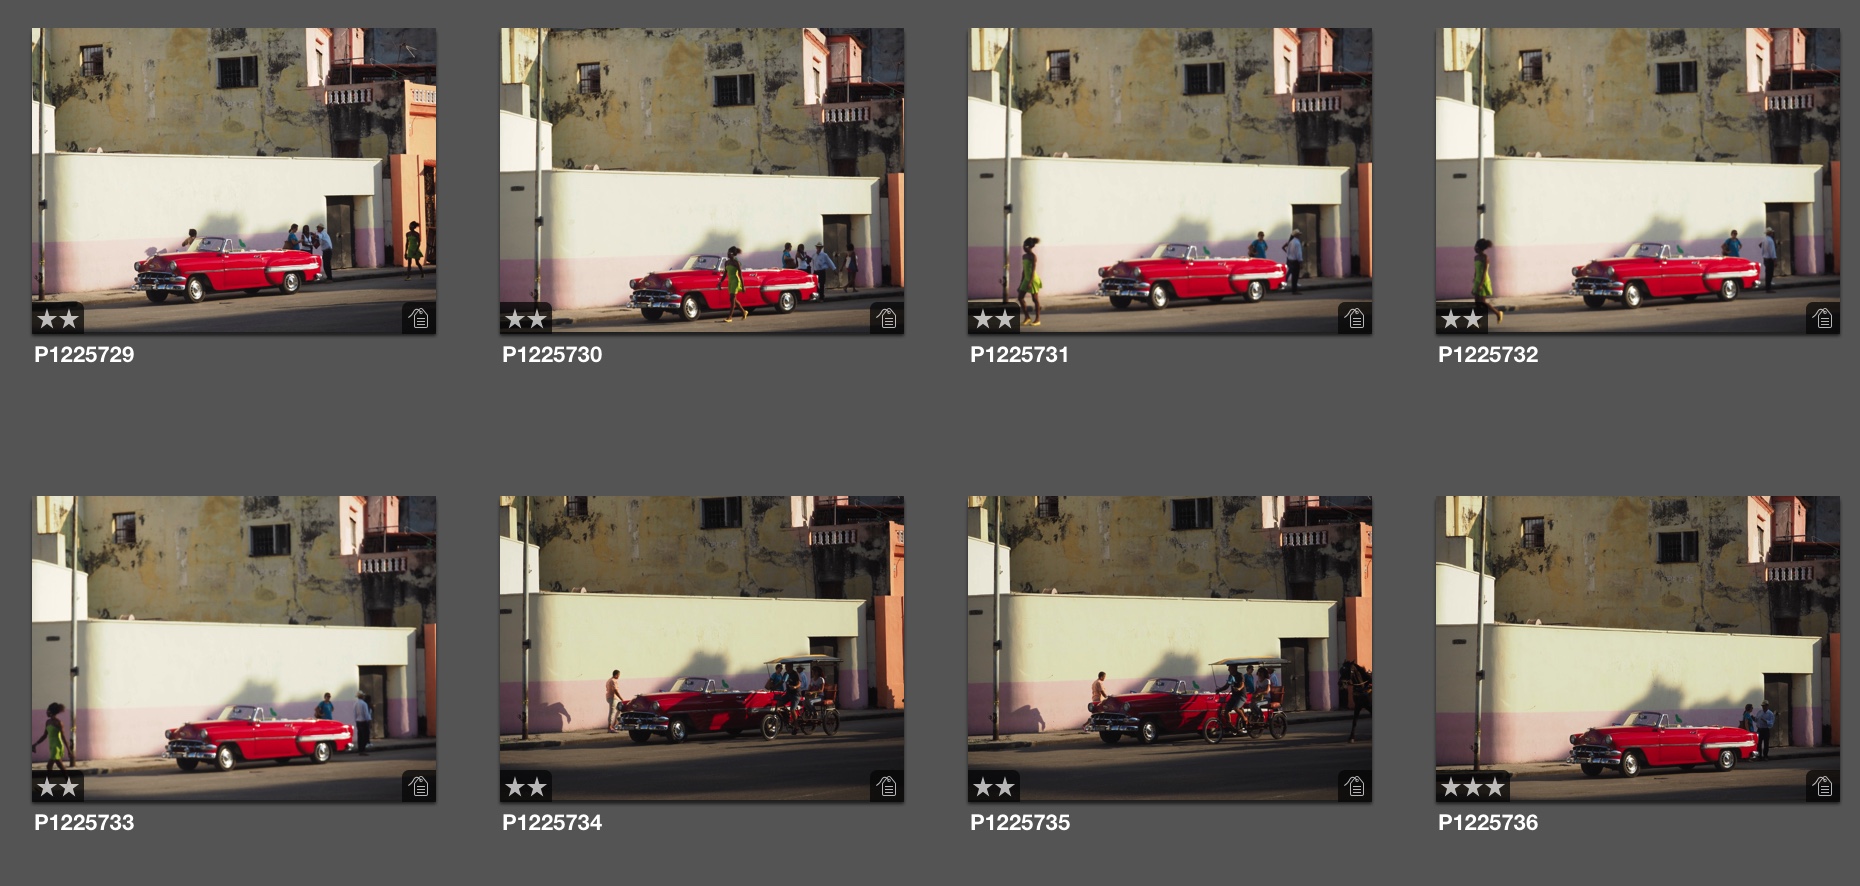 http://thedigitalstory.com/2015/02/07/red-car-series-havana.jpg